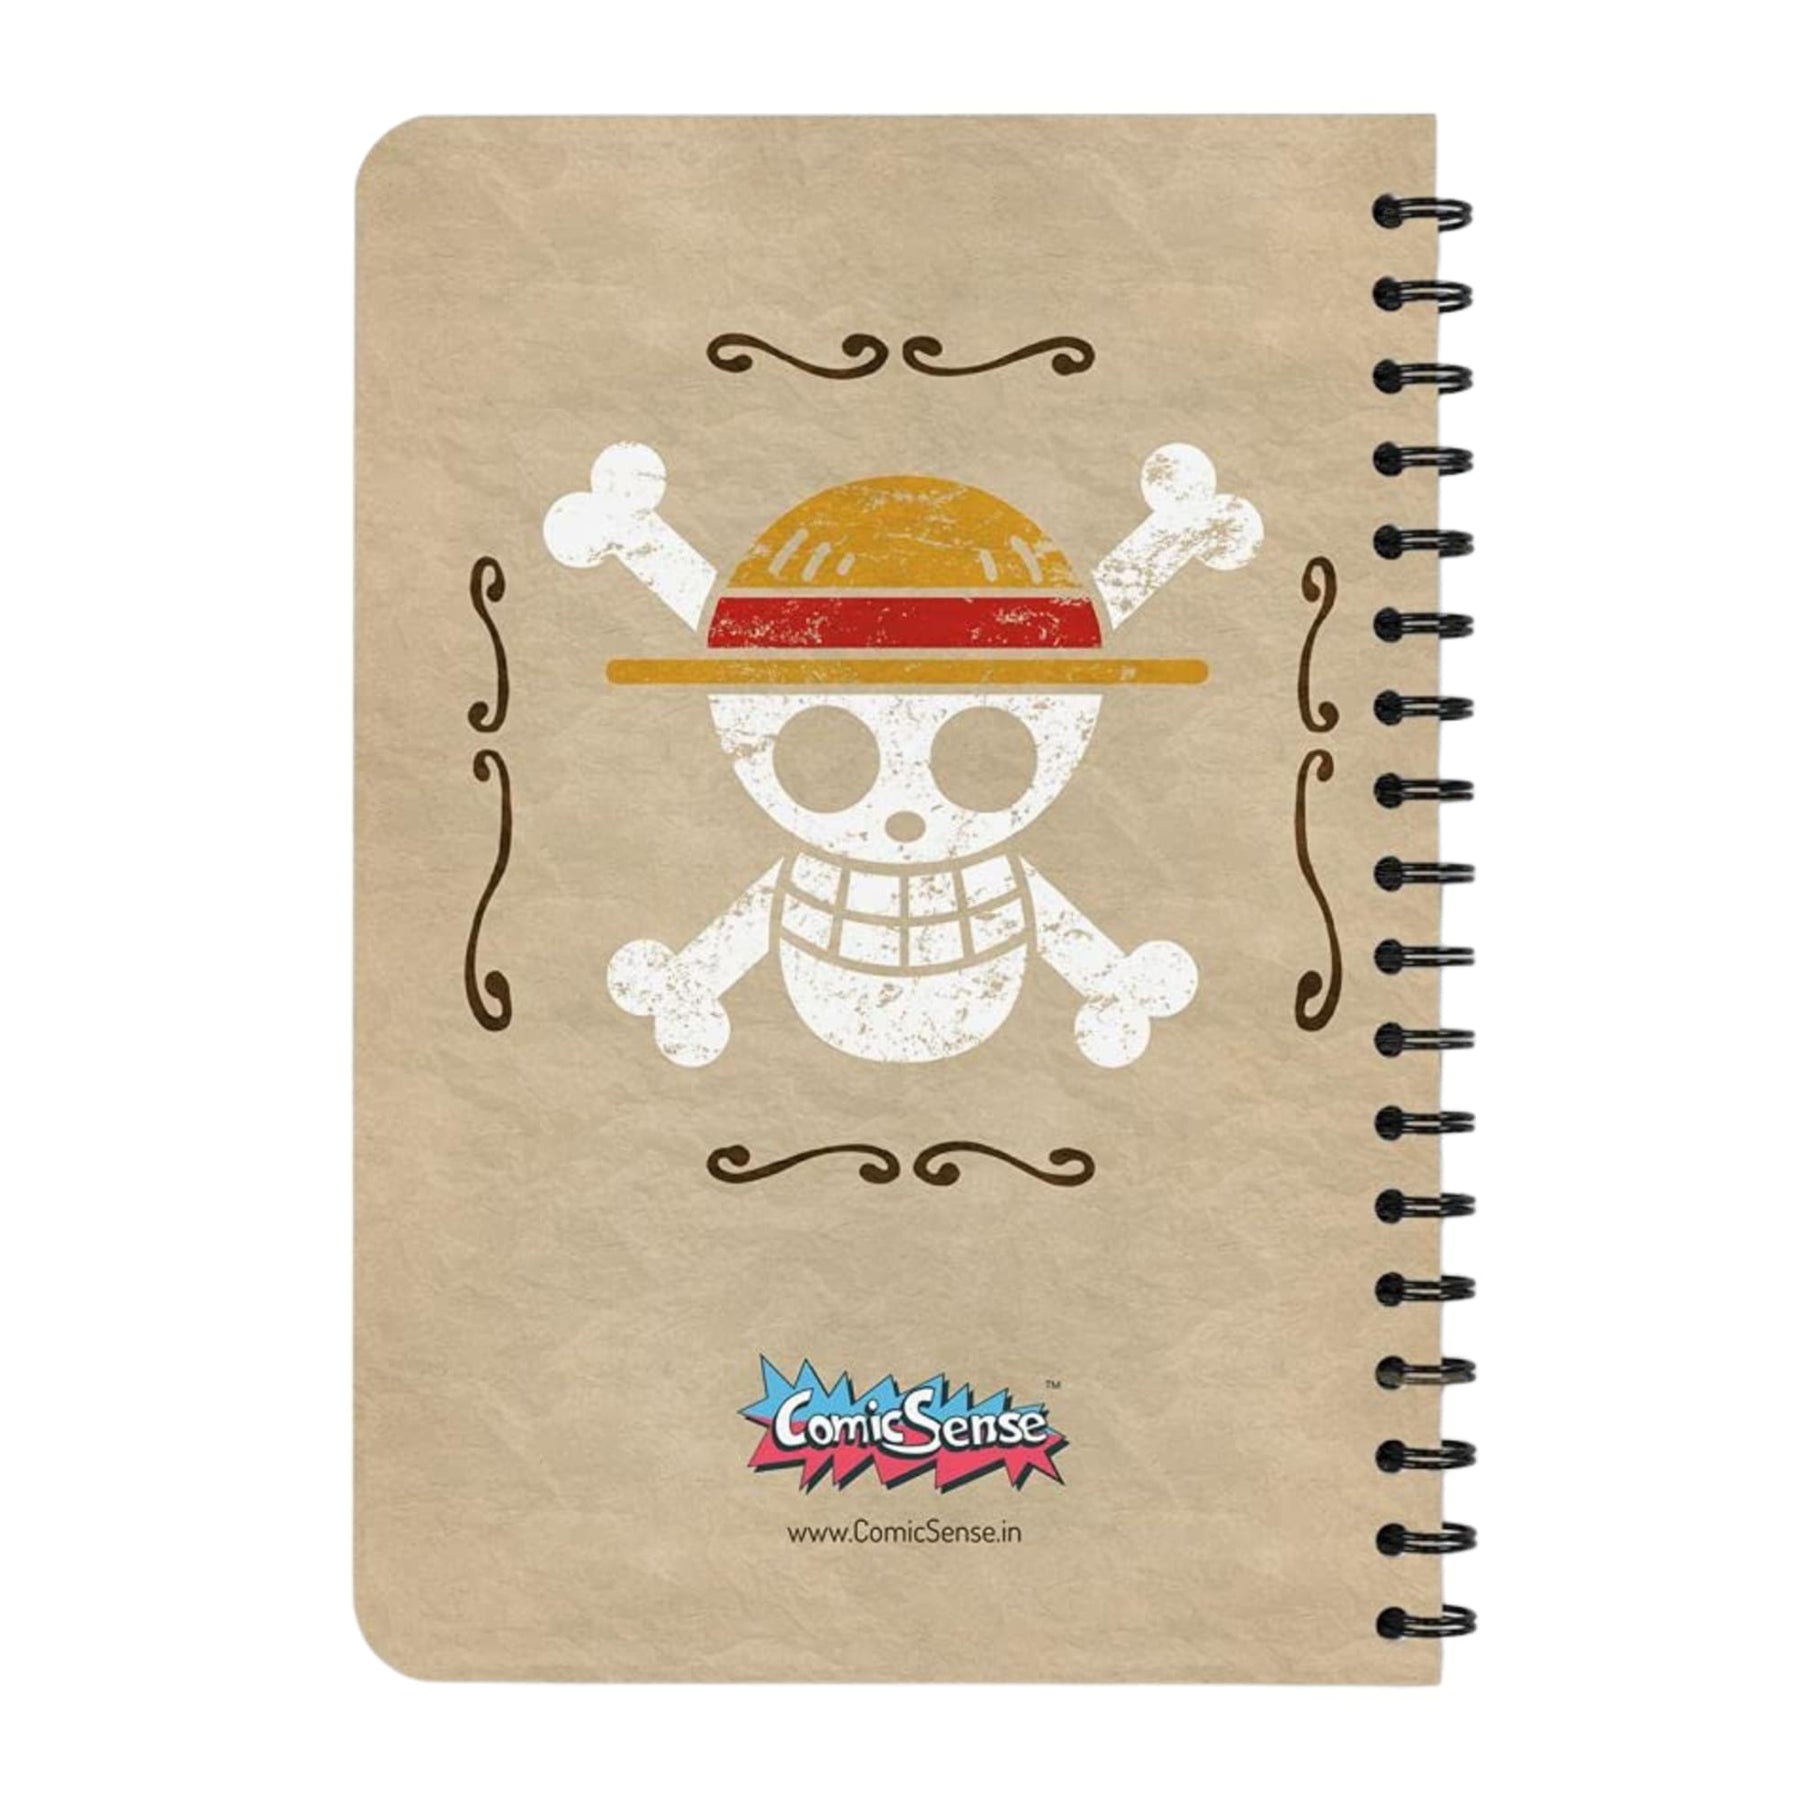 One Piece Notebook - Tony Tony Chopper Notebook